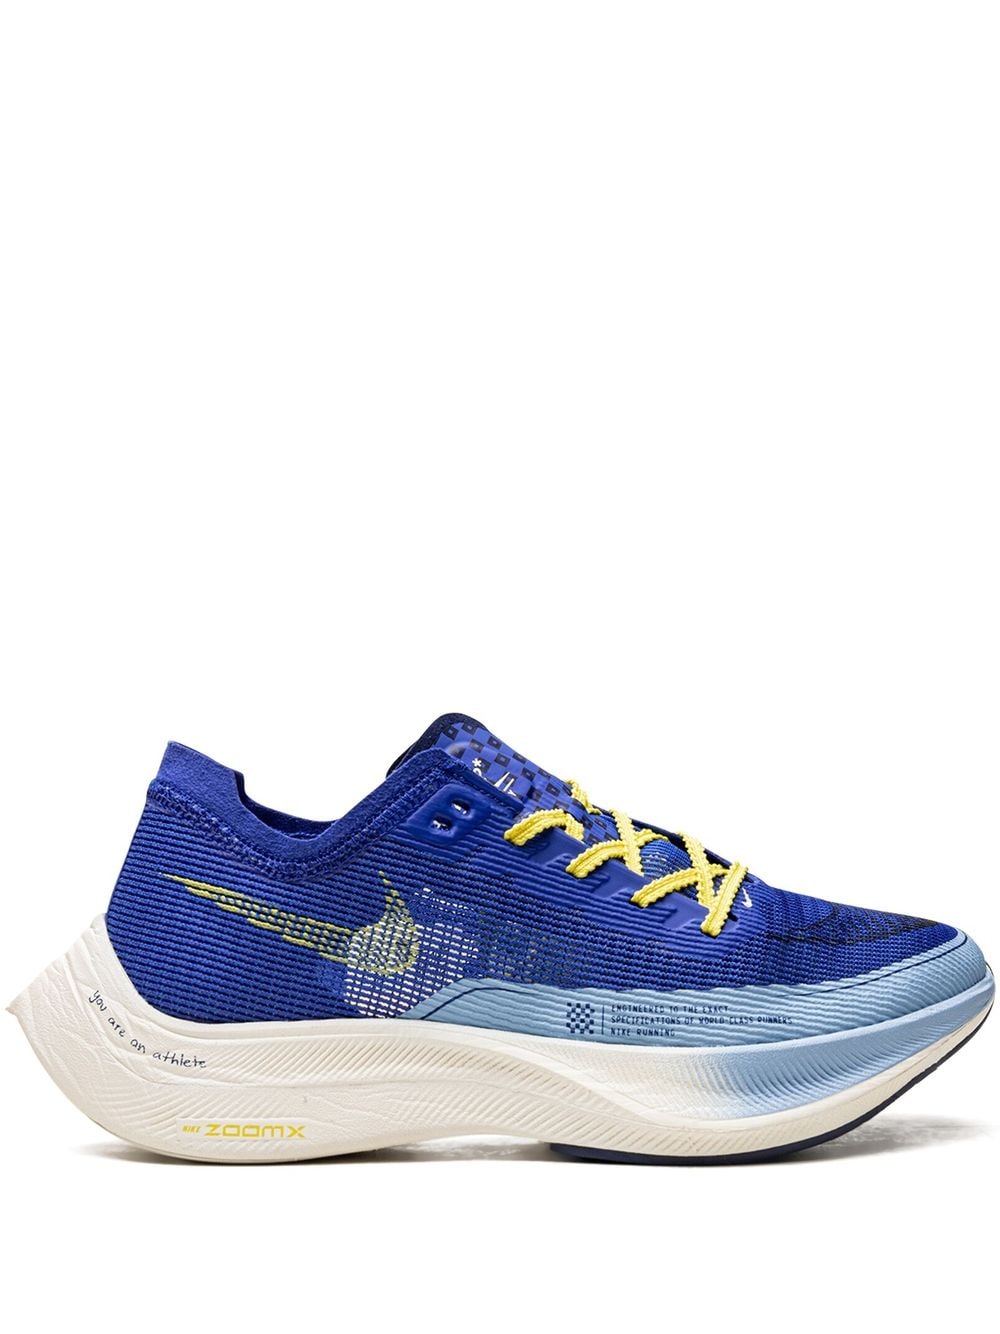 Nike ZoomX Vaporfly Next% 2 "Hyper Royal Yellow Strike" sneakers - Blue von Nike